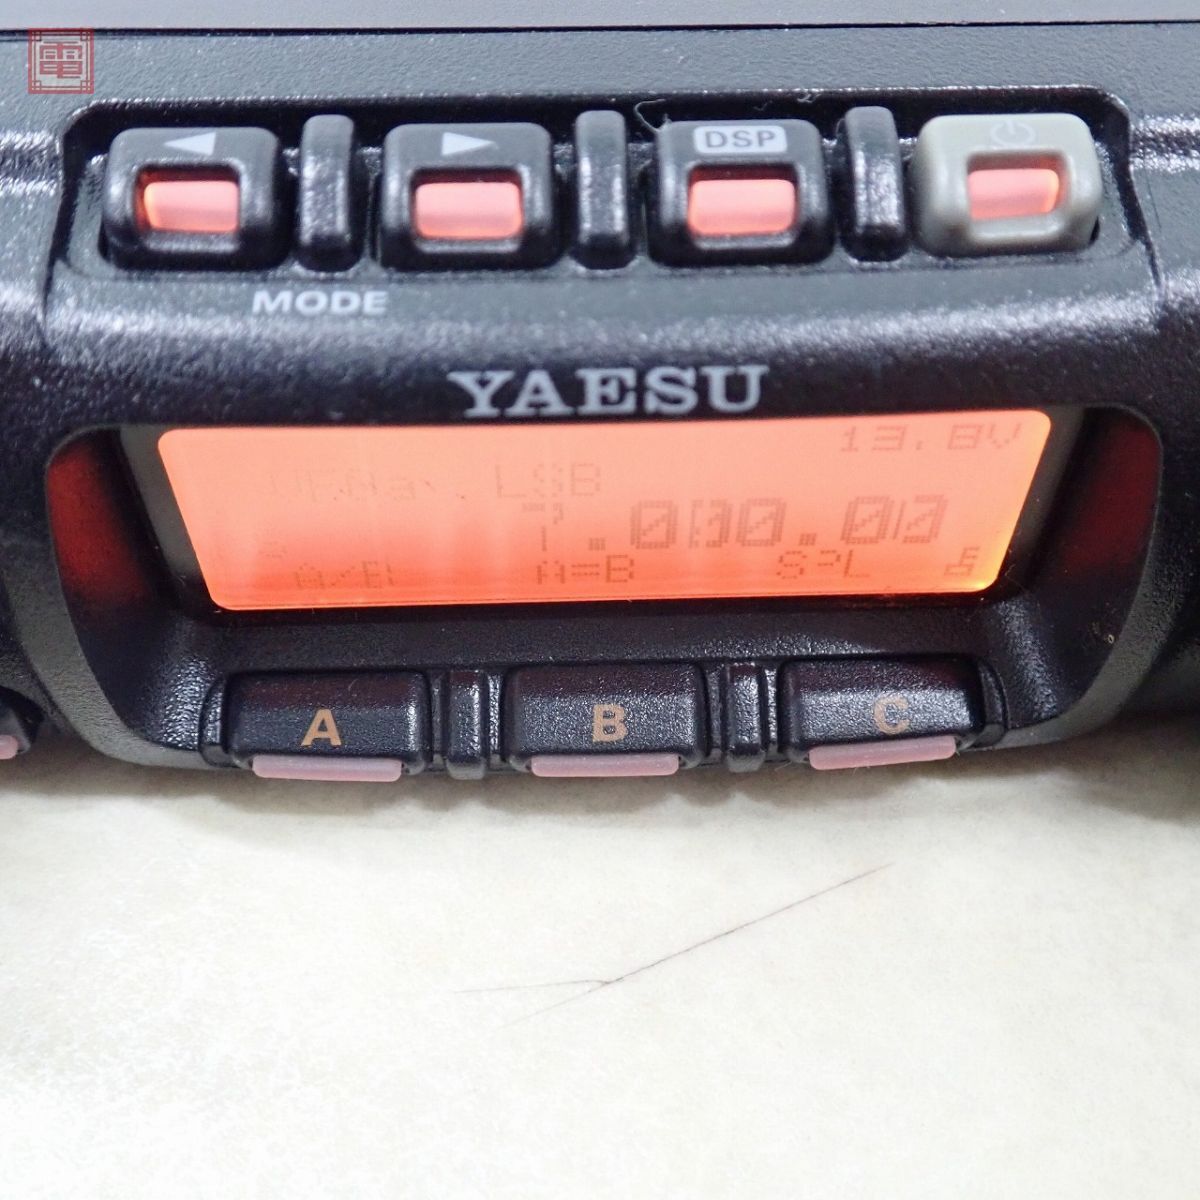  Yaesu FT-857D HF obi /50/144/430MHz 100W/50W/20W manual attaching Yaesu [20